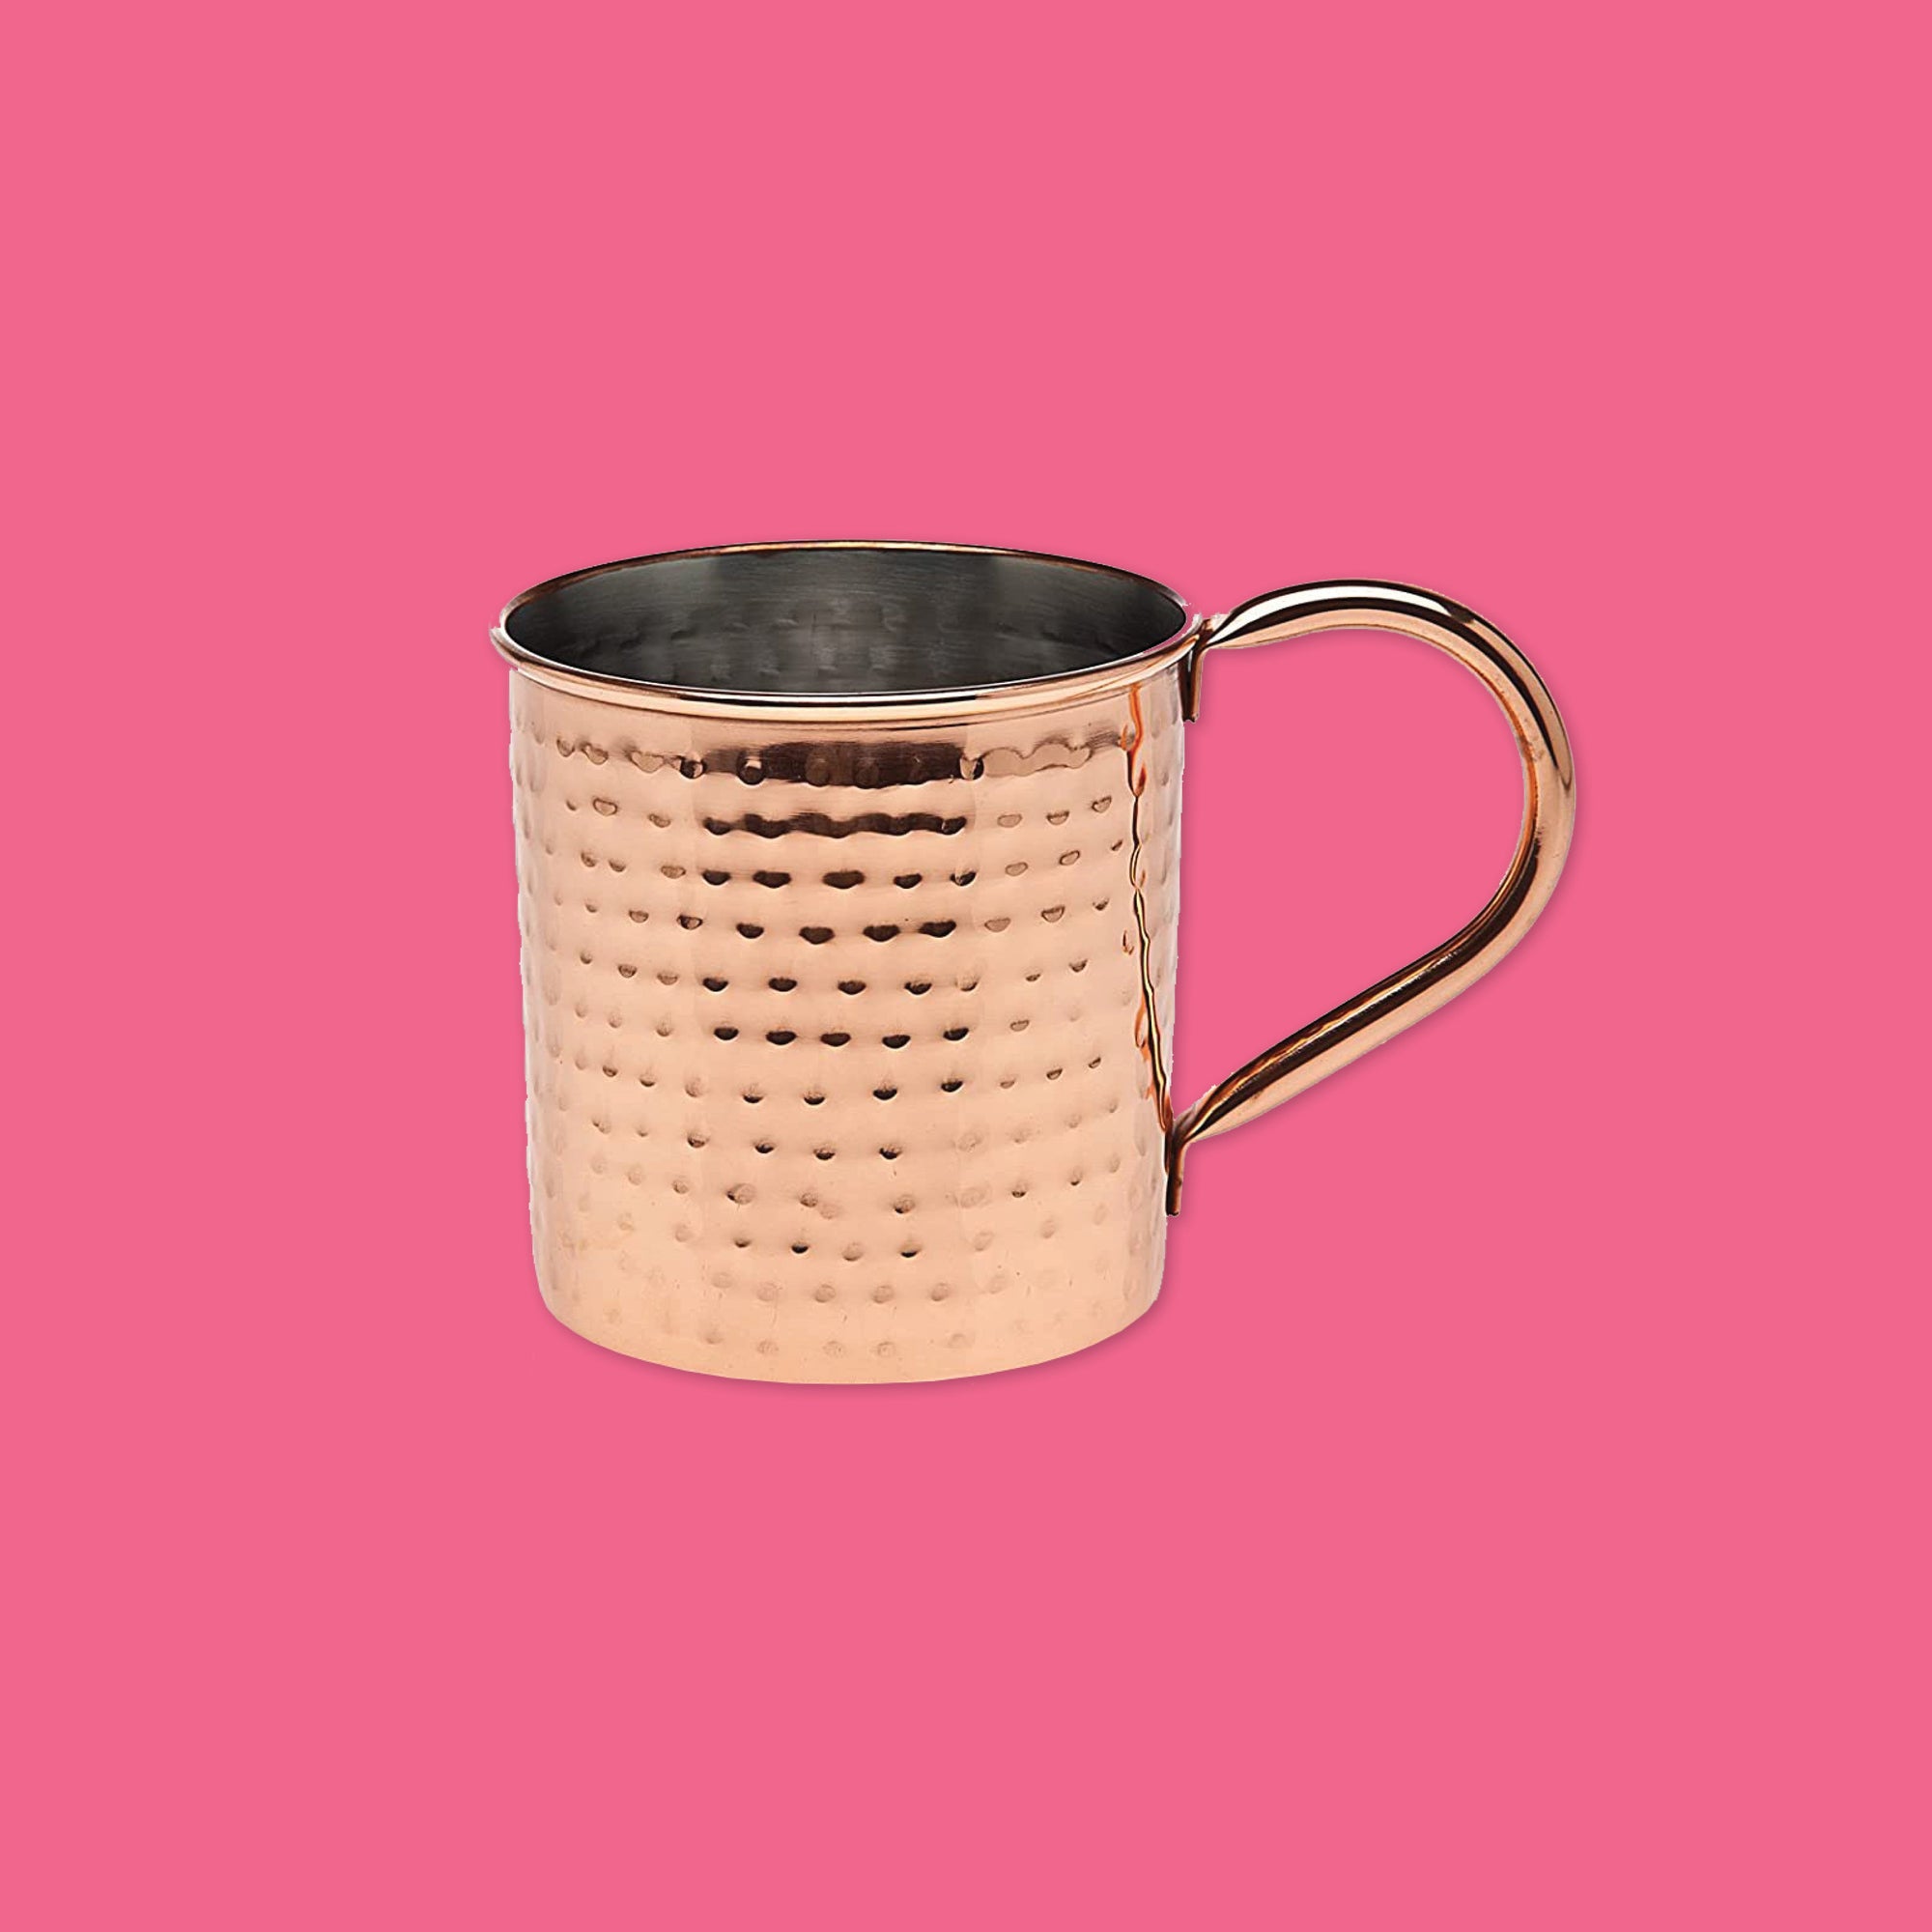 On a hot pink background sit a hammered, copper mug. 